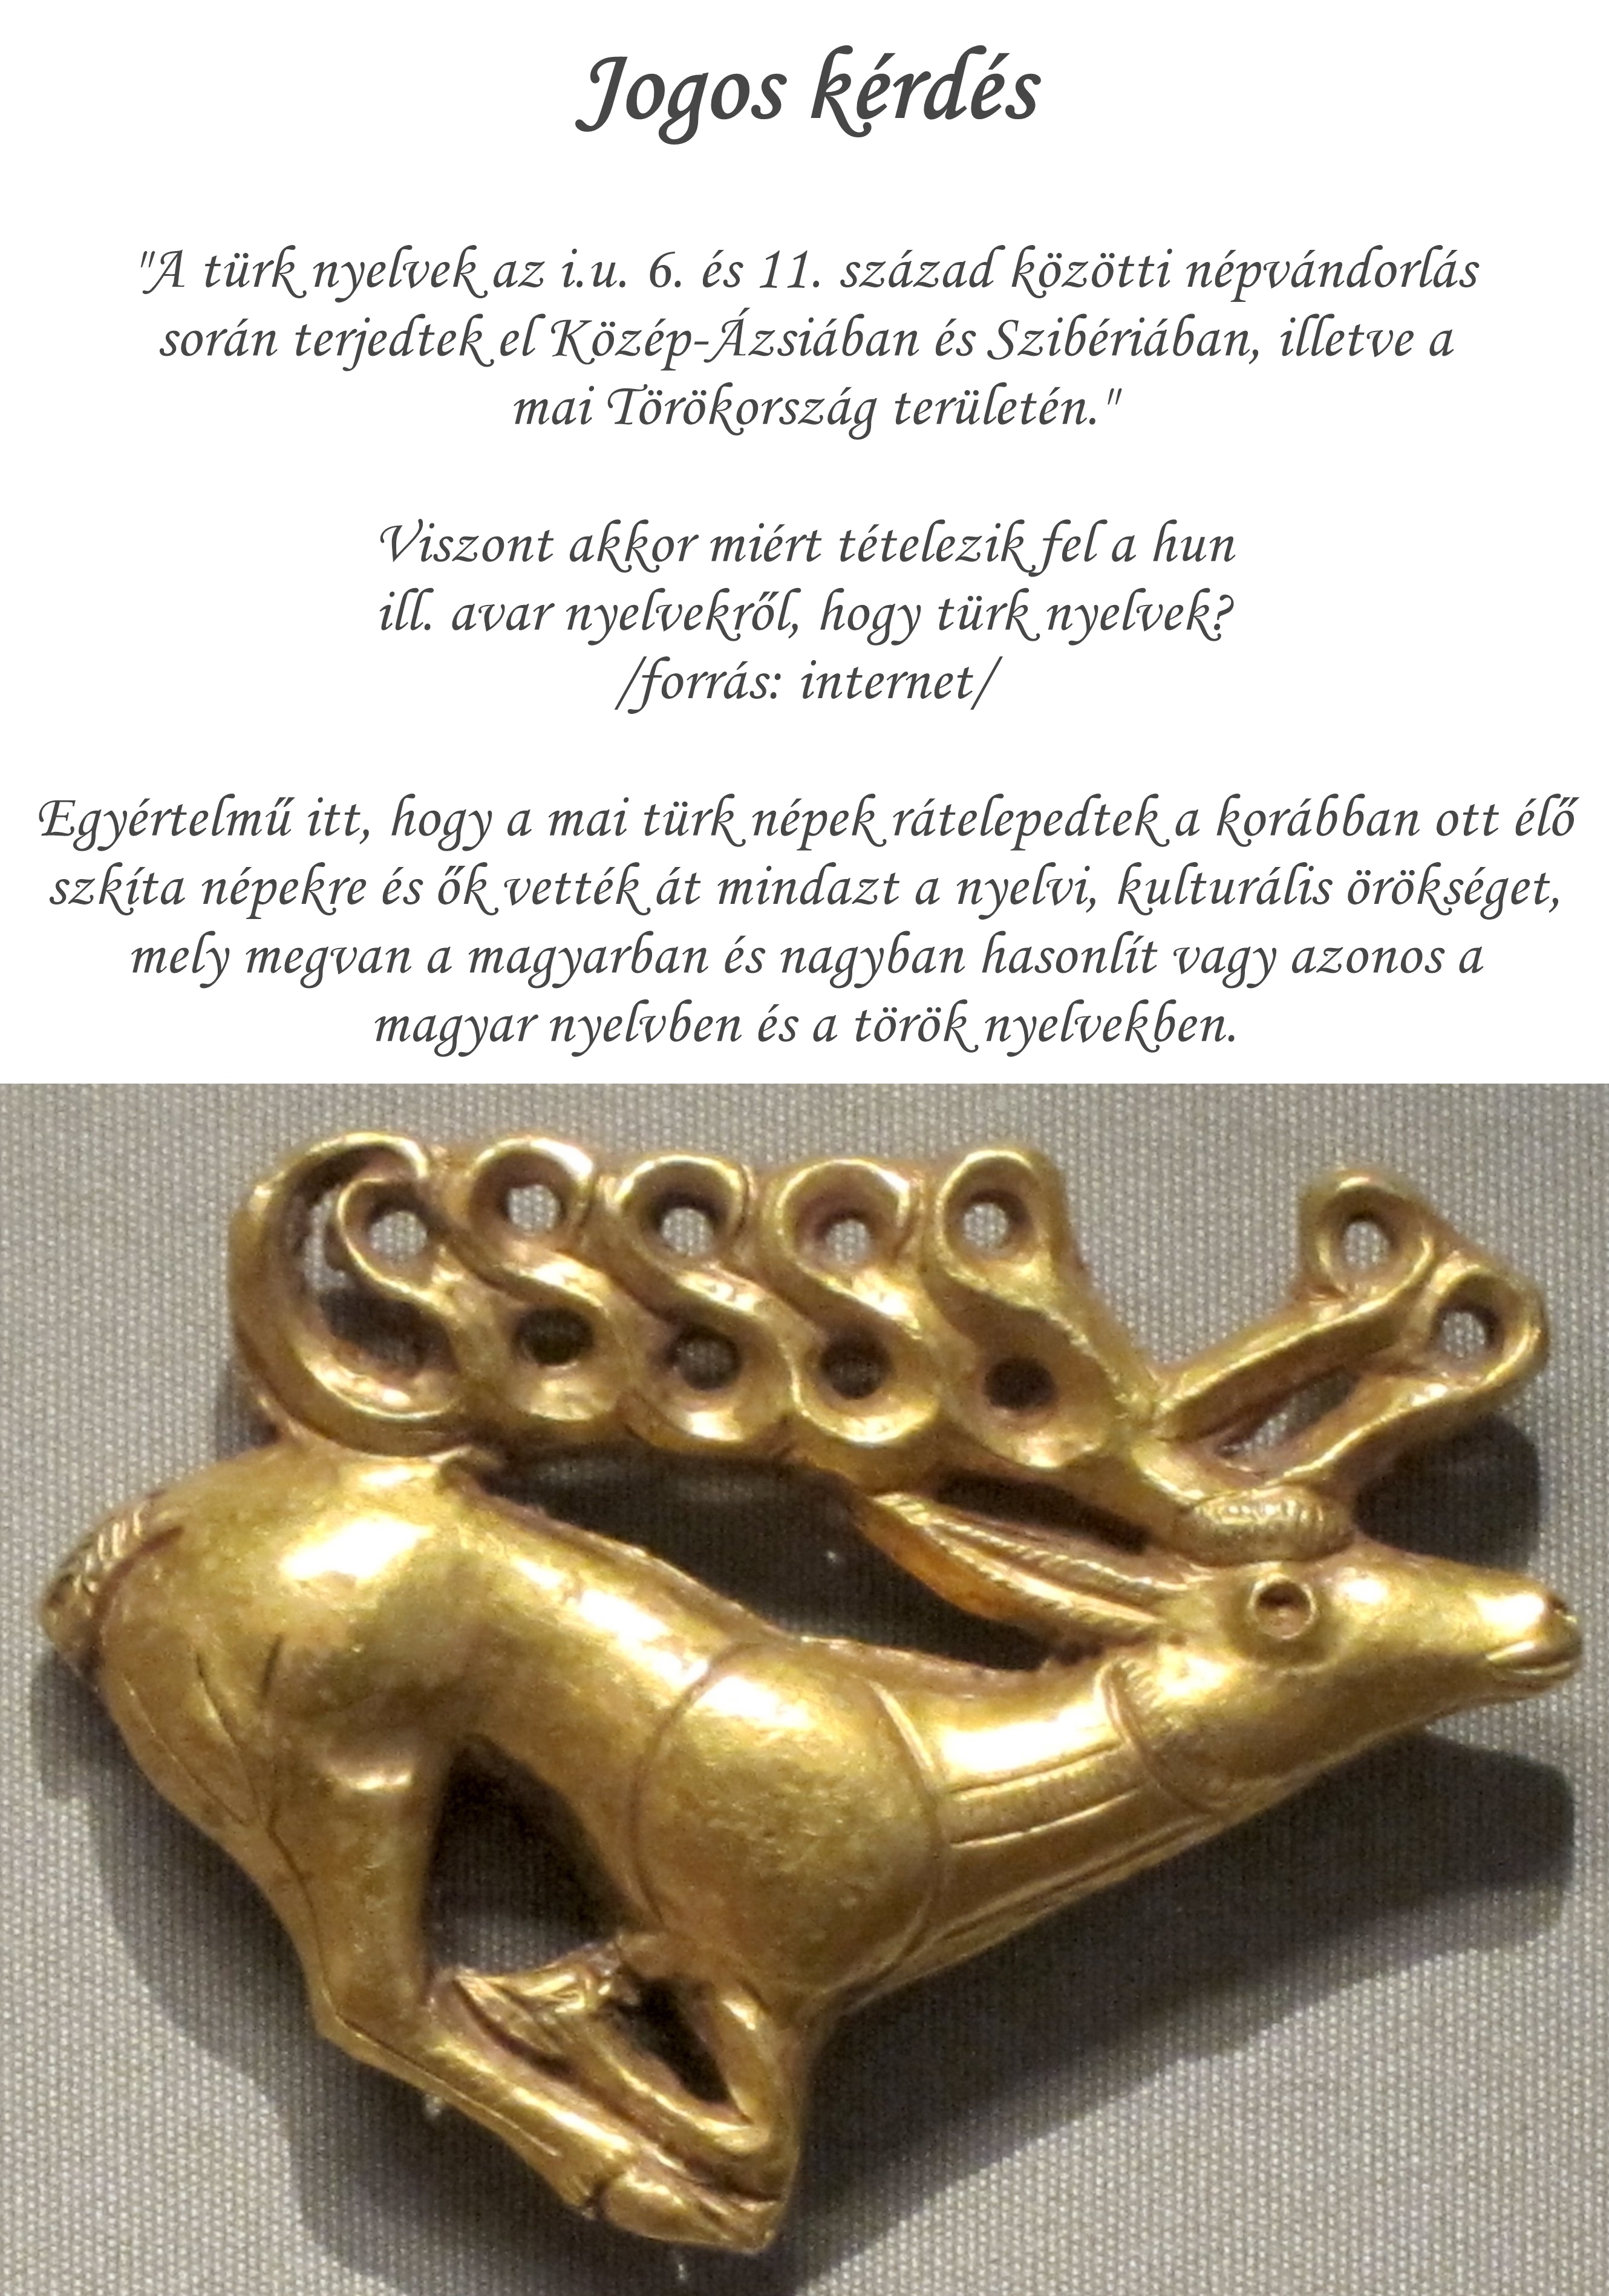 stag_plaque_400-300_bce_gold_scythian_cleveland_museum_of_art.JPG